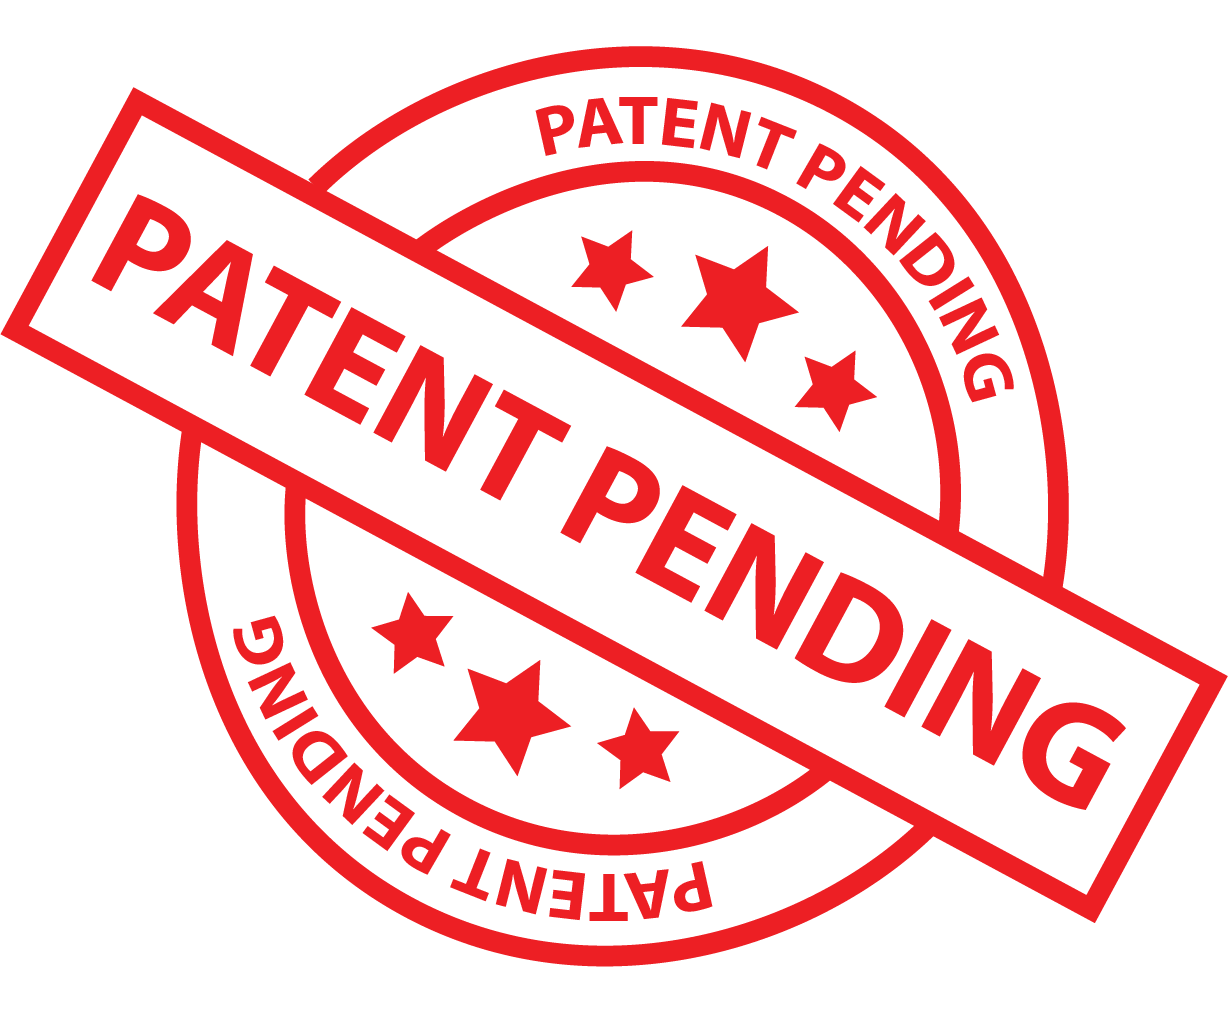 patent pending